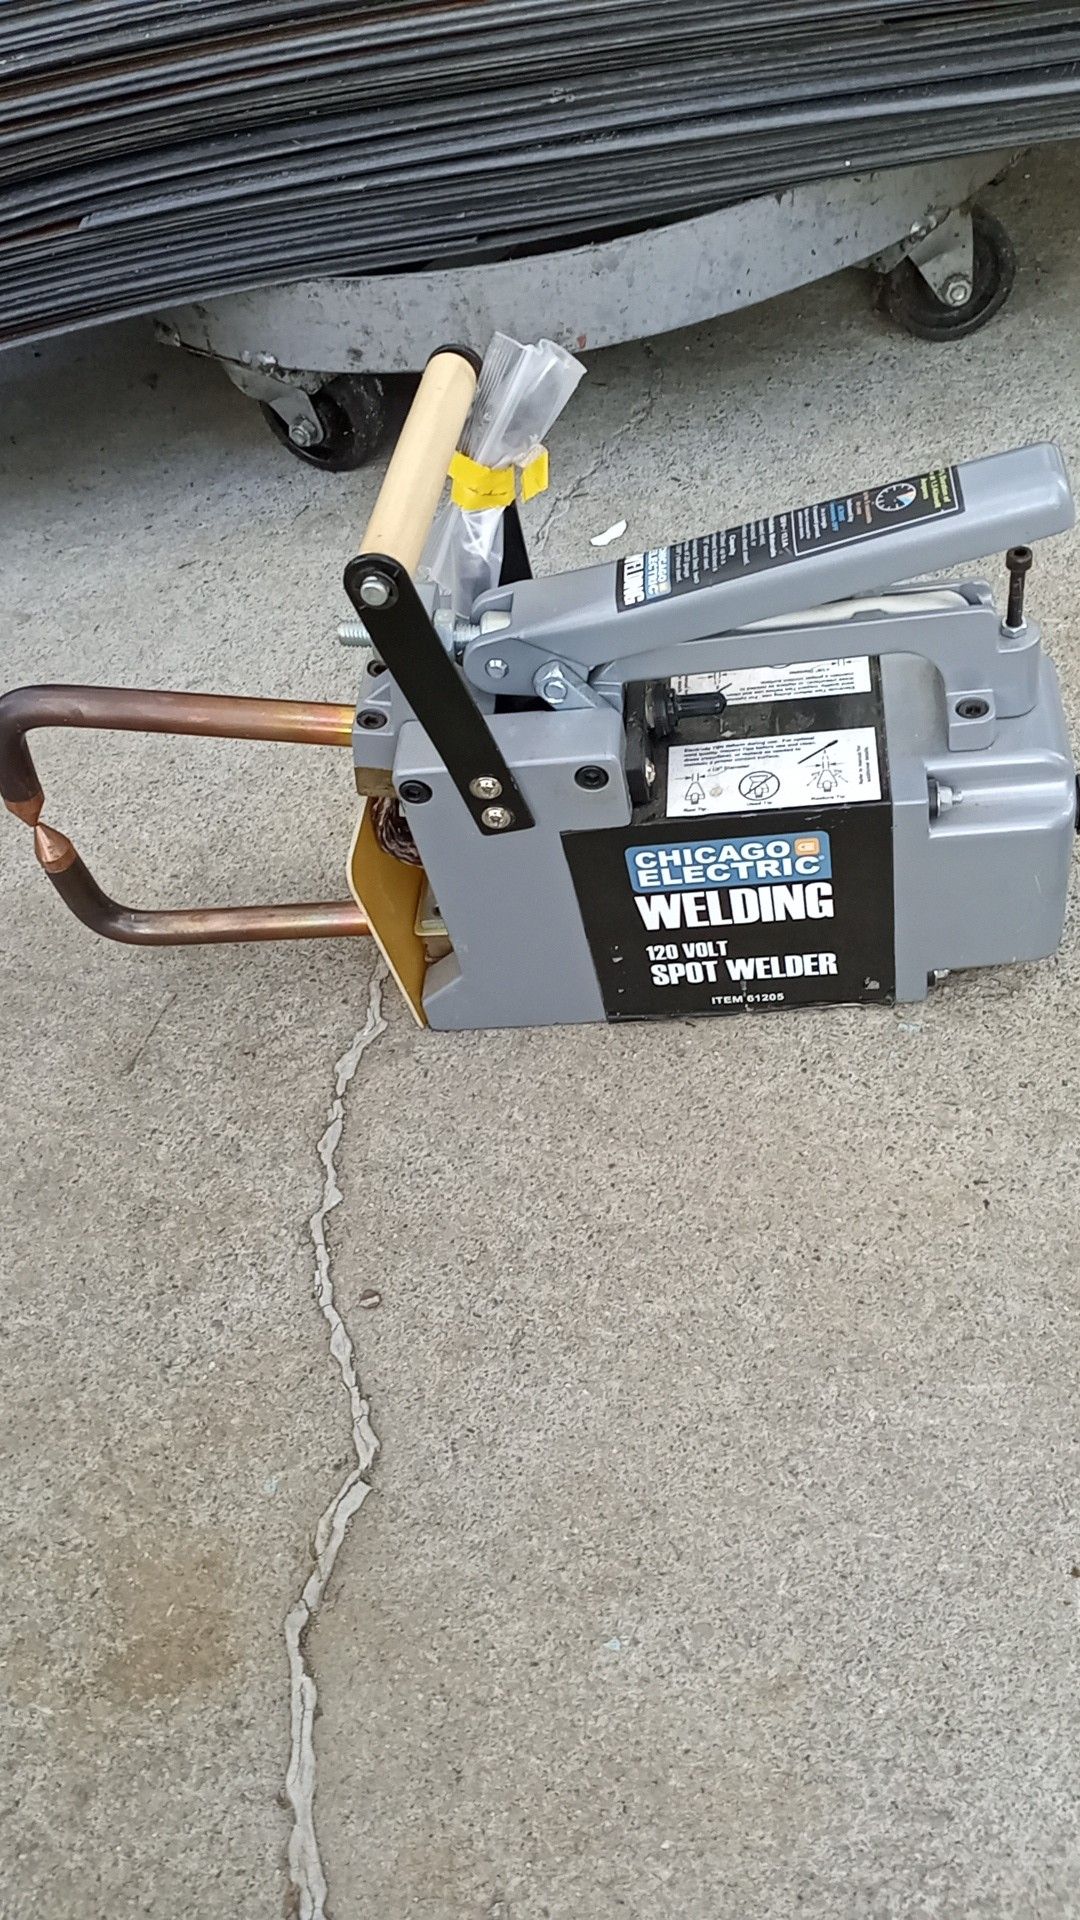 Portable spot welder 110 volts works great